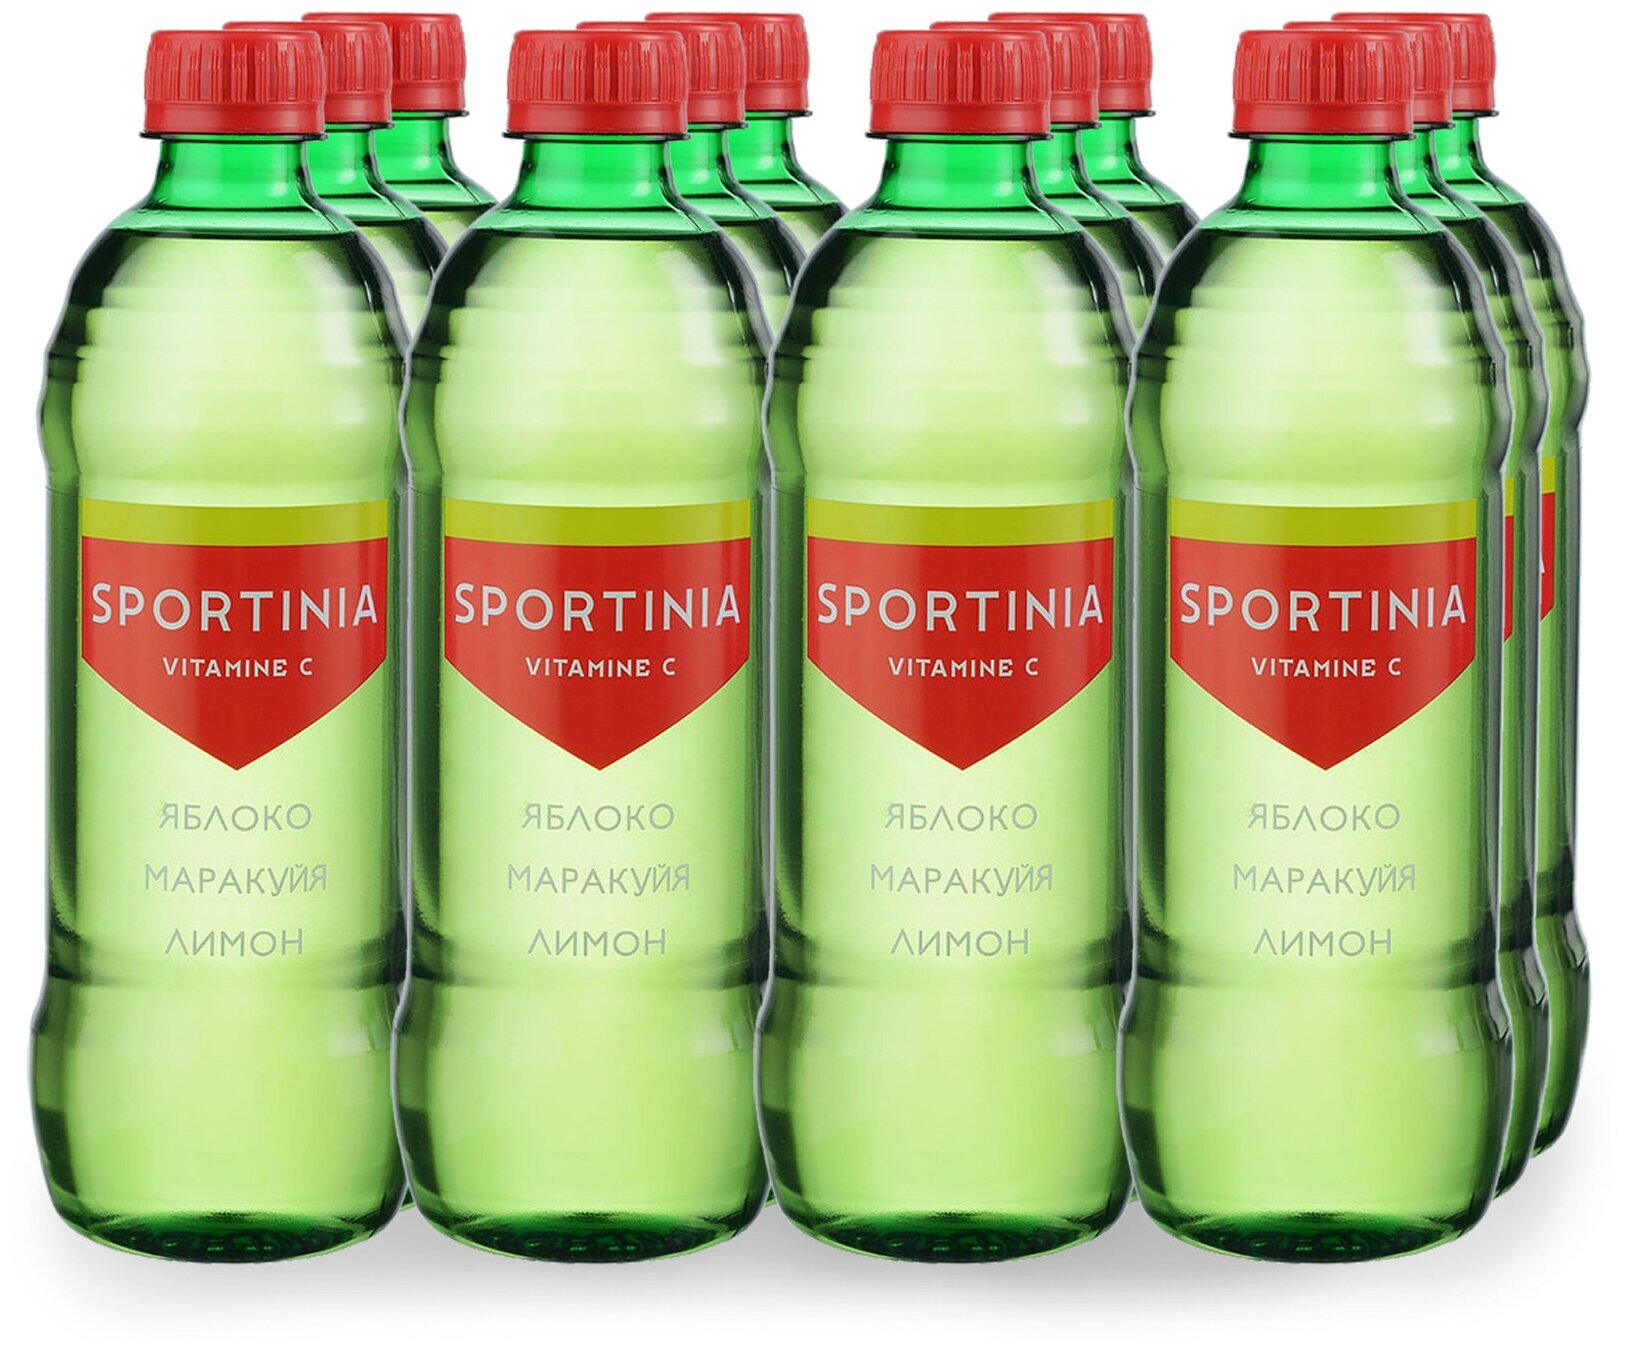 Спортивный витаминизированный напиток Sportinia Vitamine C (Спортиния Витамин С) Яблоко, маракуйя, лимон 0.5 л / 12 бут.